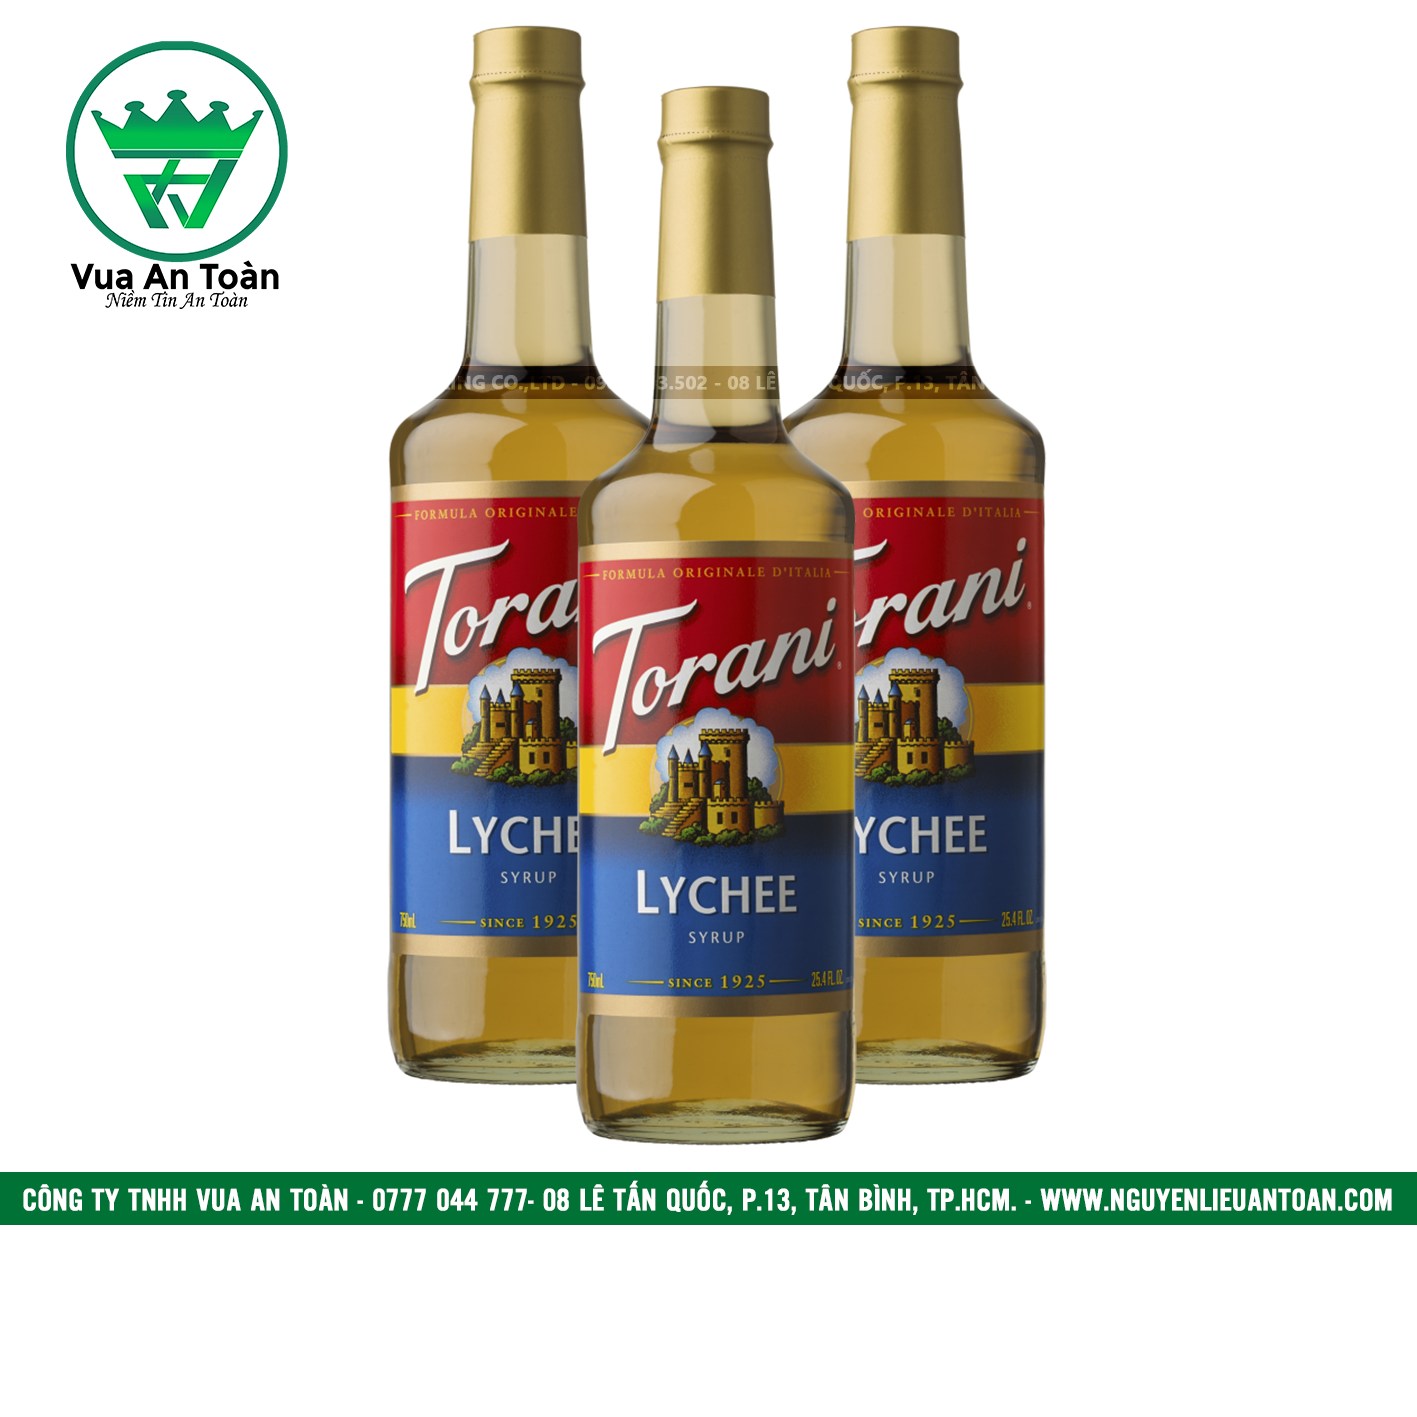 Torani Vải - Lychee Syrup